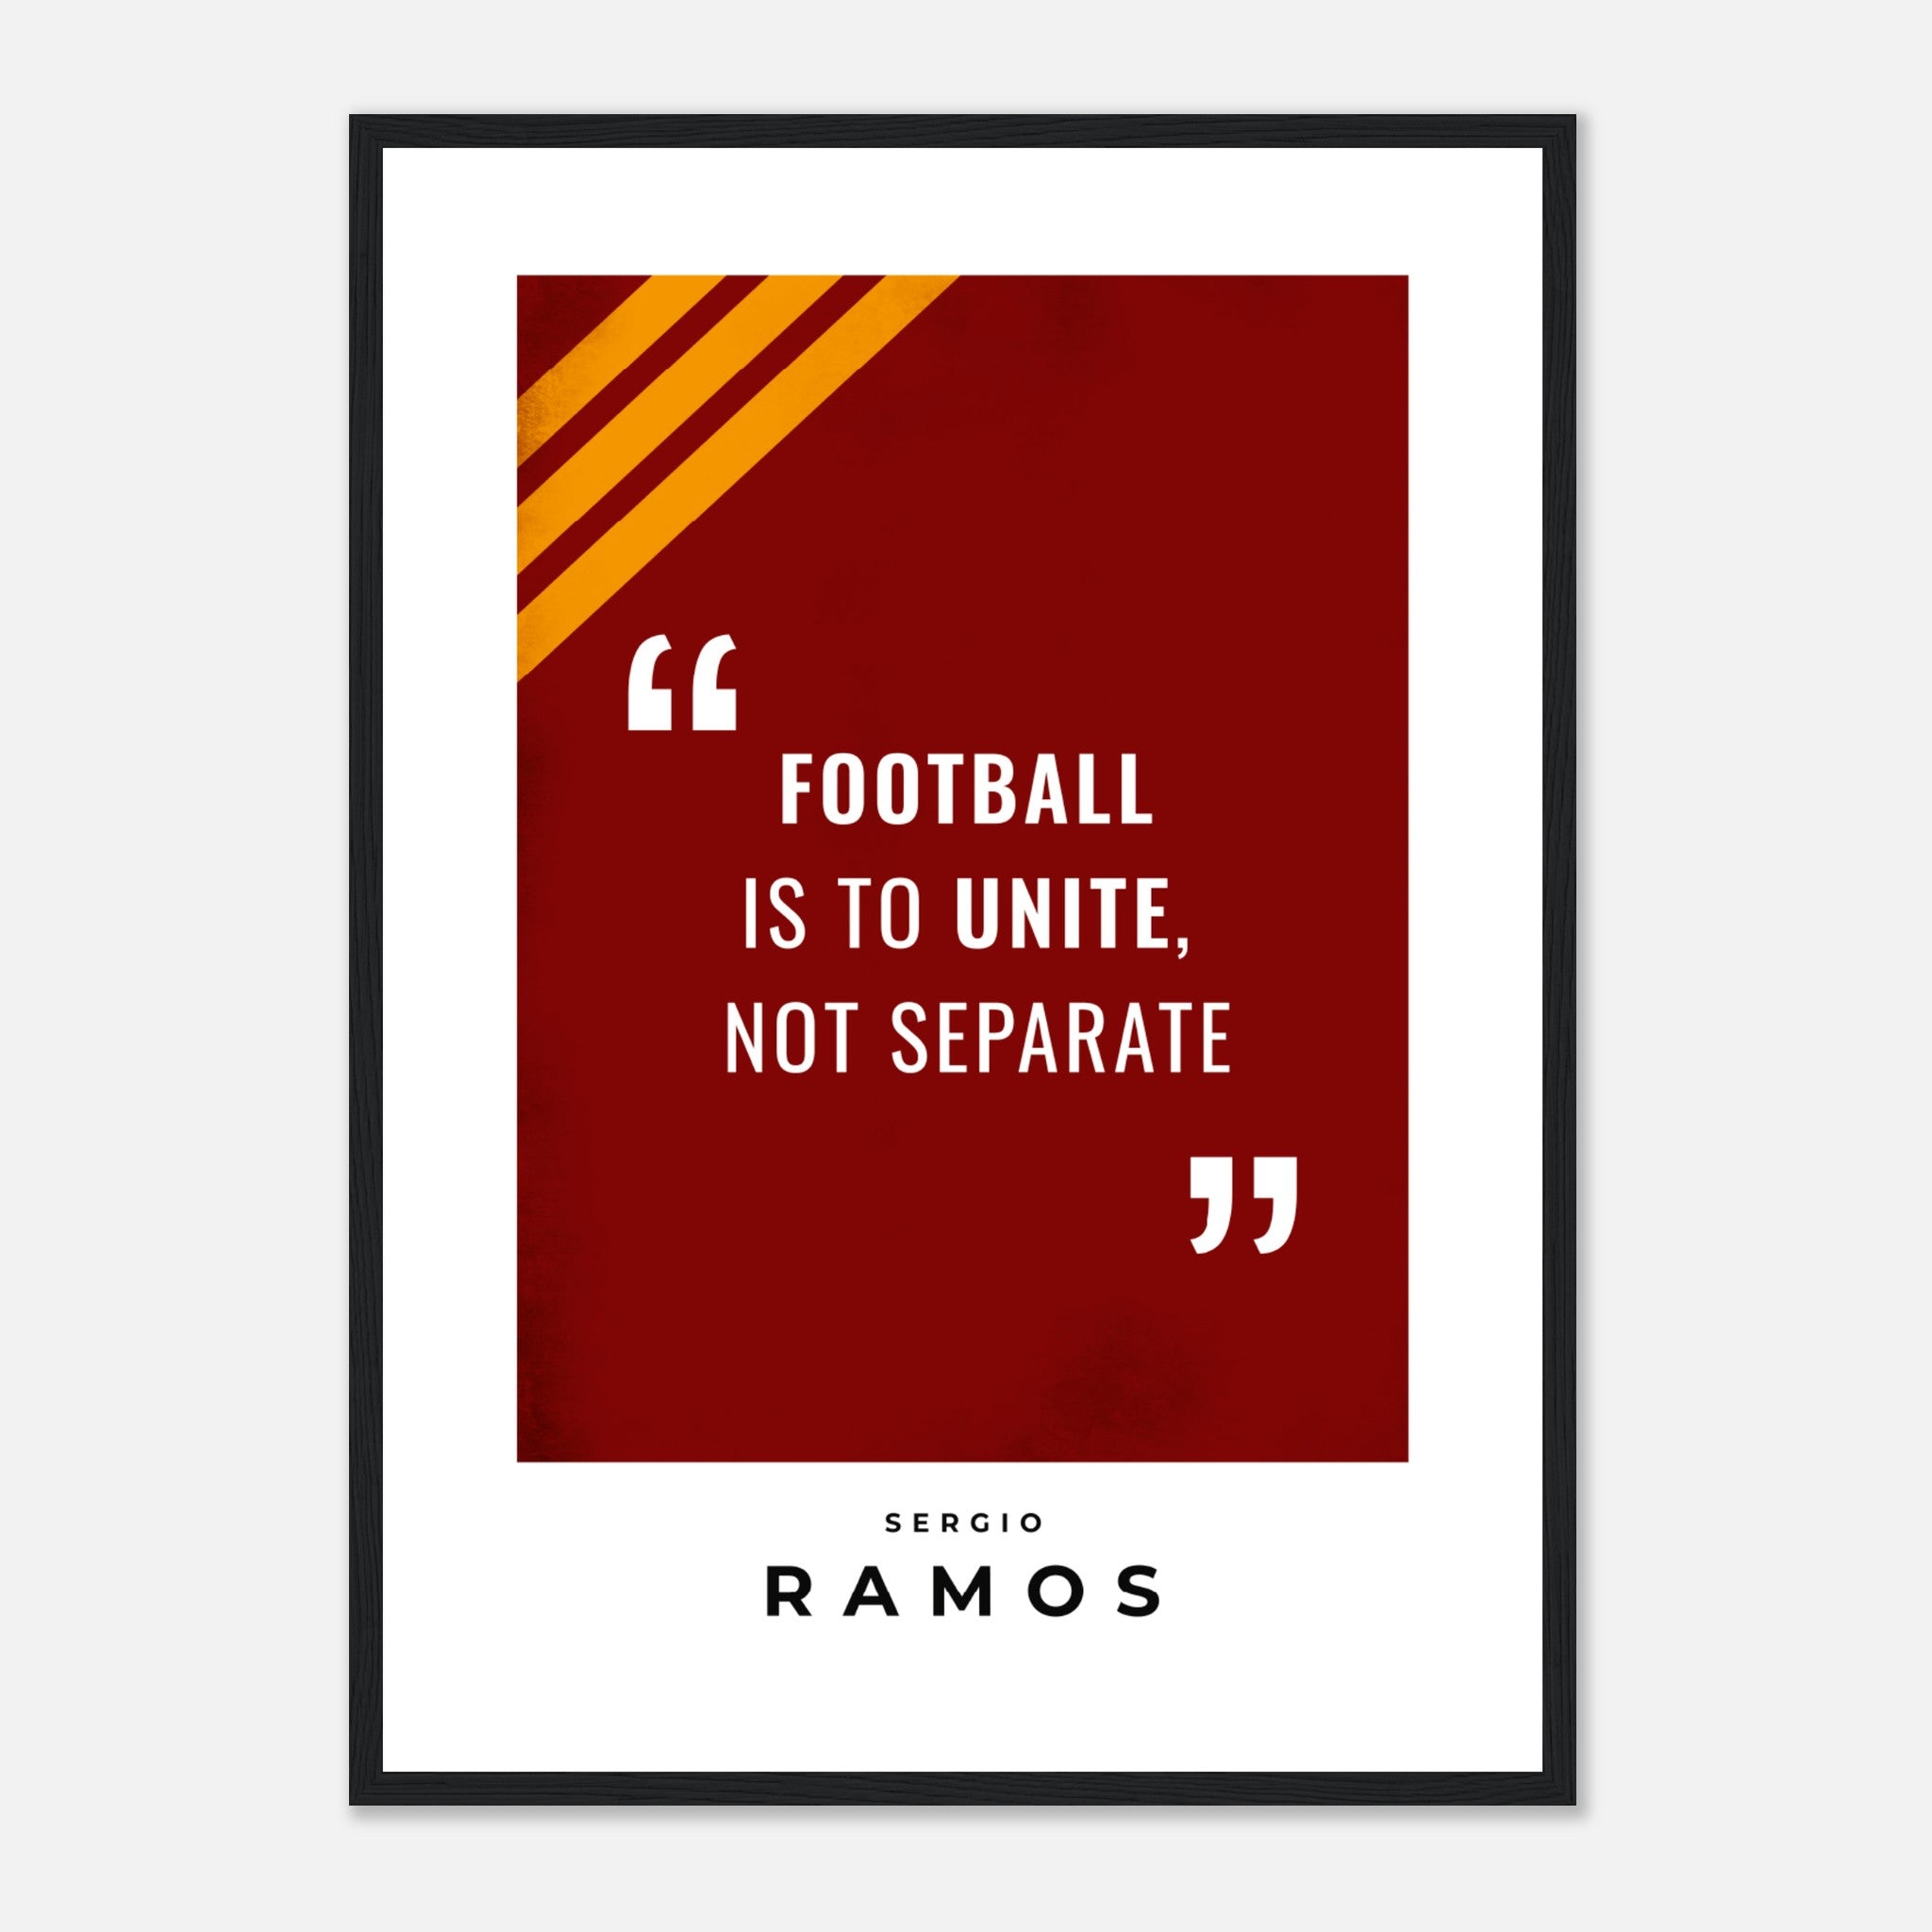 Sergio Ramos Quote Poster